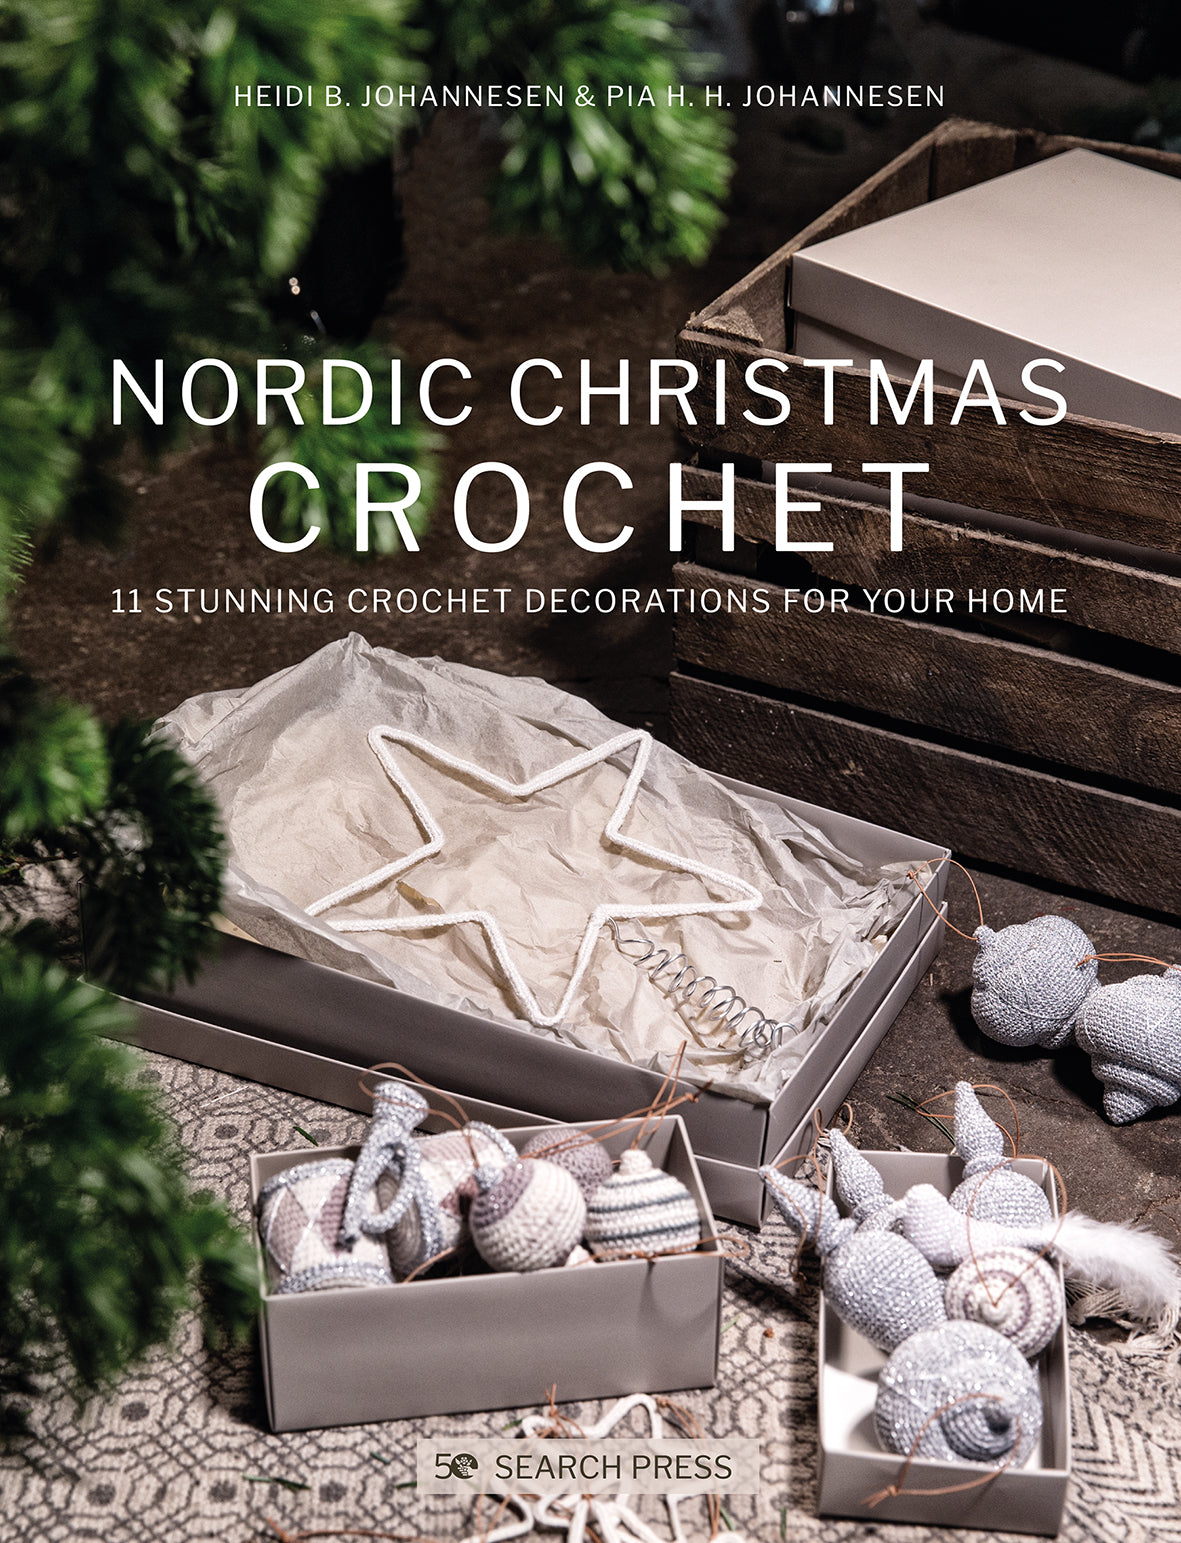 Nordic Christmas Crochet by Krea Deluxe Search Press